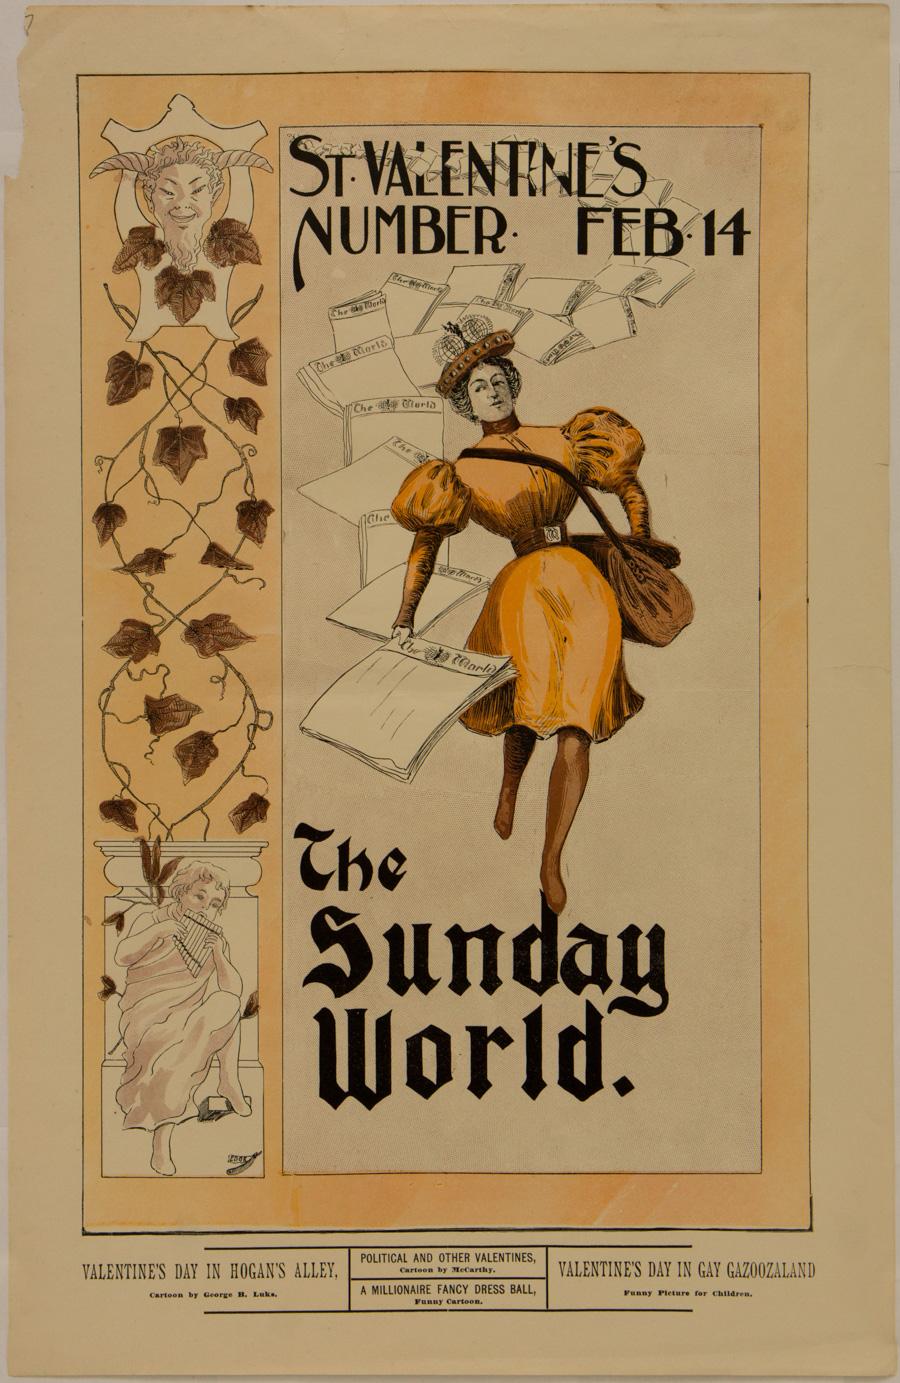 F. Gilbert Edge Figurative Print - The Sunday World; St. Valentine's Number, Feb. 14